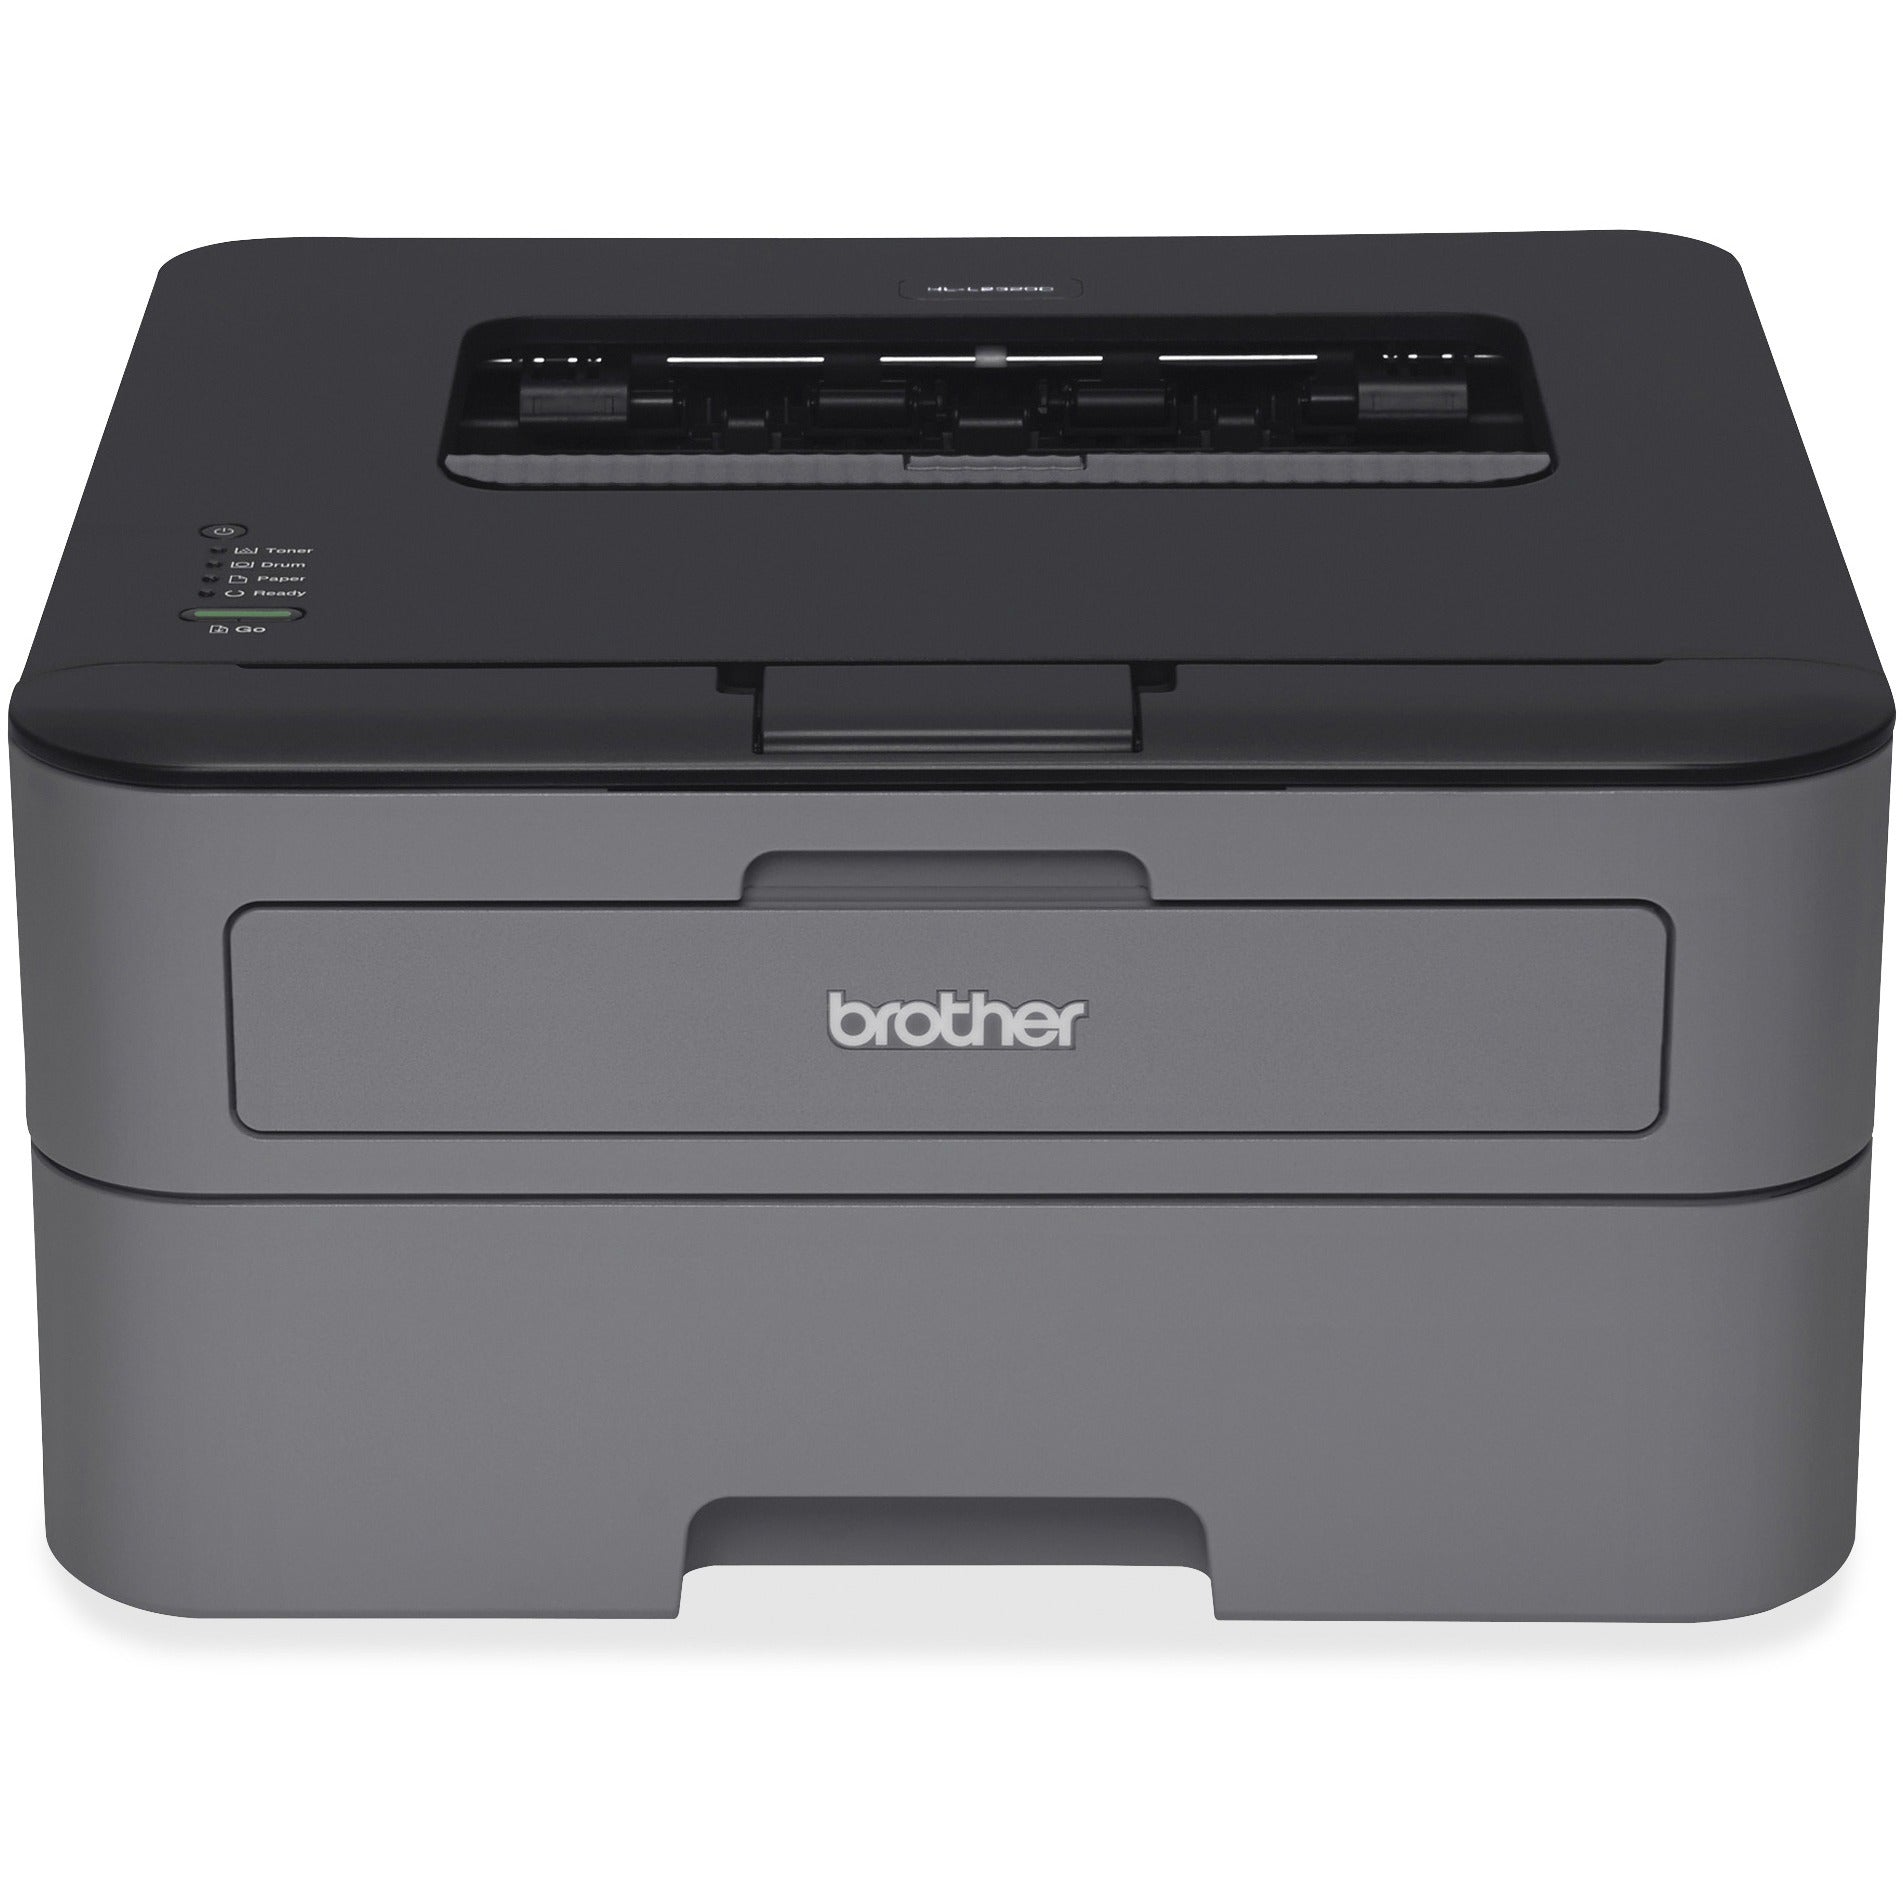 Brother HL-L2300D Laser Printer - Monochrome - Duplex - Laser Printer - 2400 x 600 dpi - 26 ppm Mono Print - USB 2.0 - 2